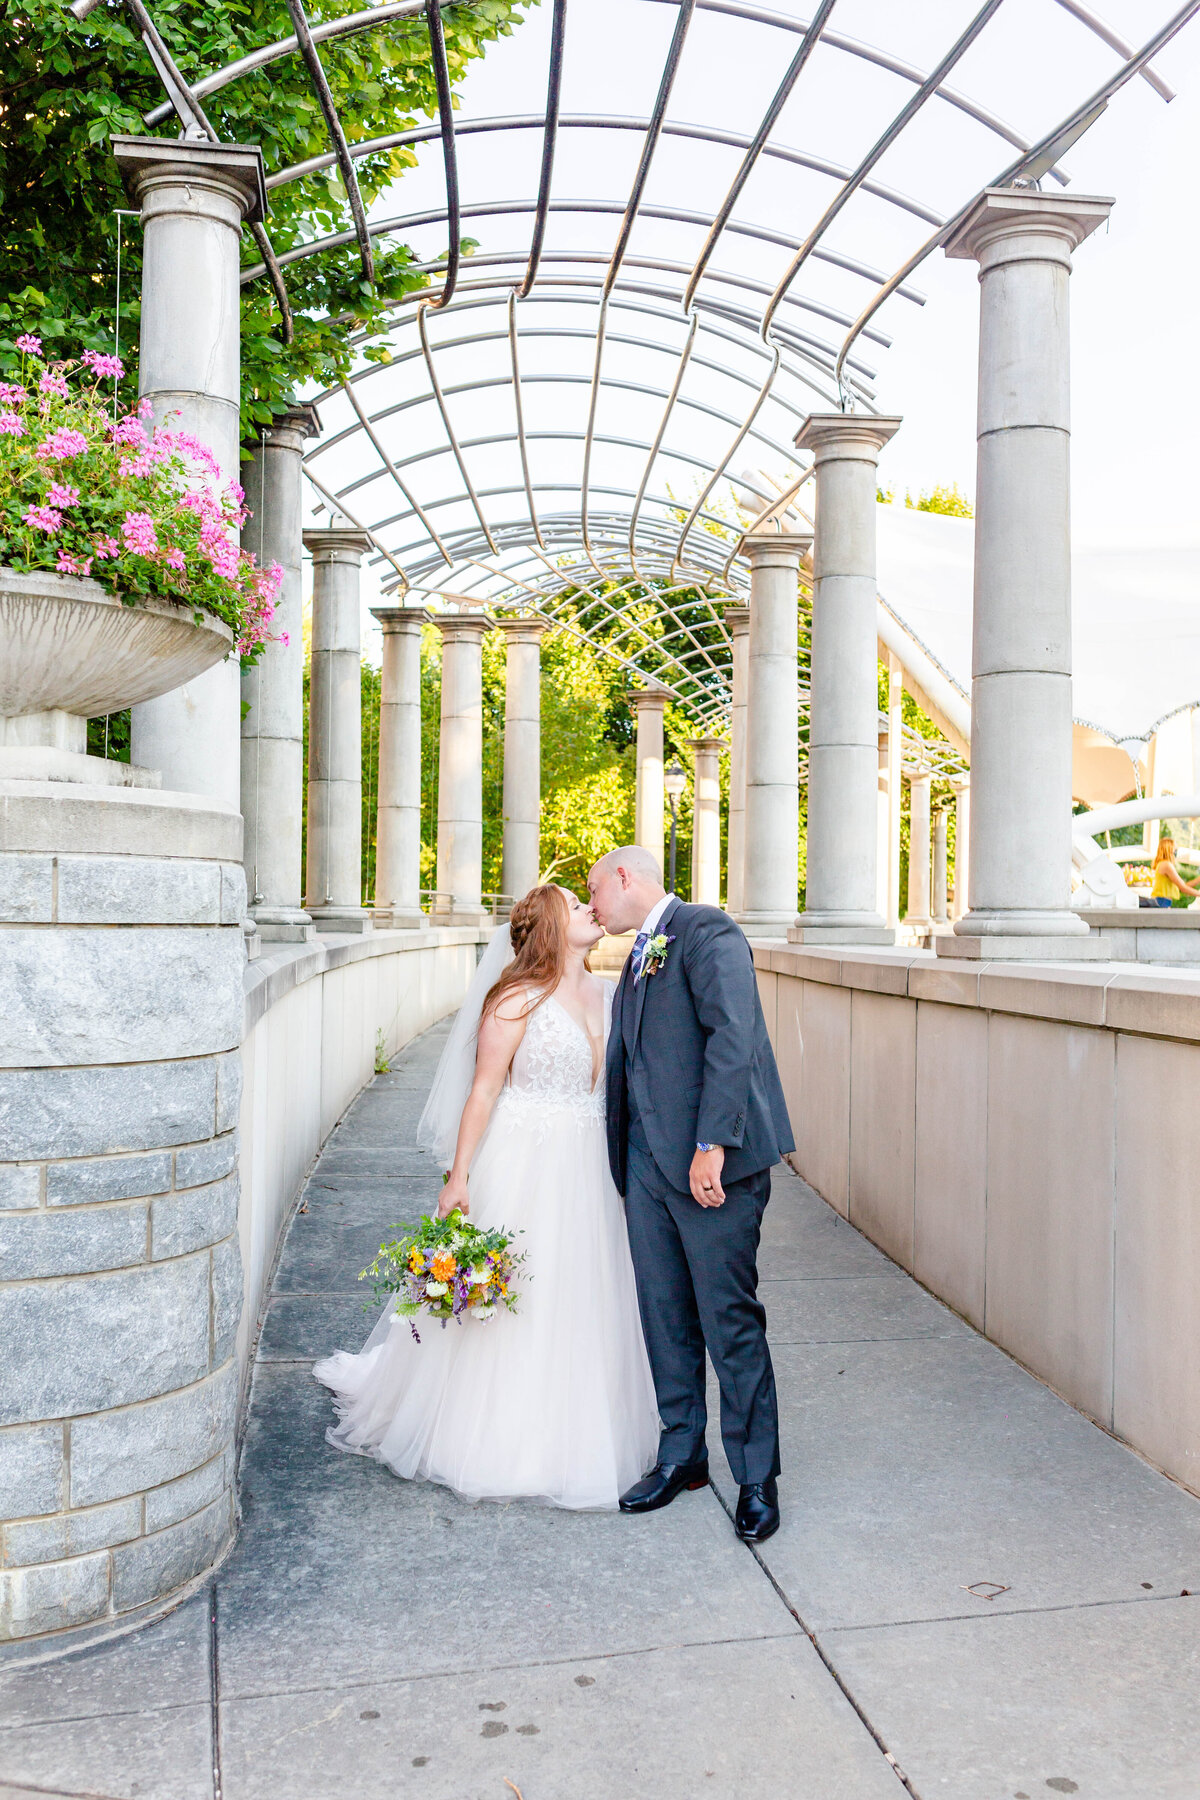 Wedding & Senior Photographer based in Asheville, NC & Charleston, SC